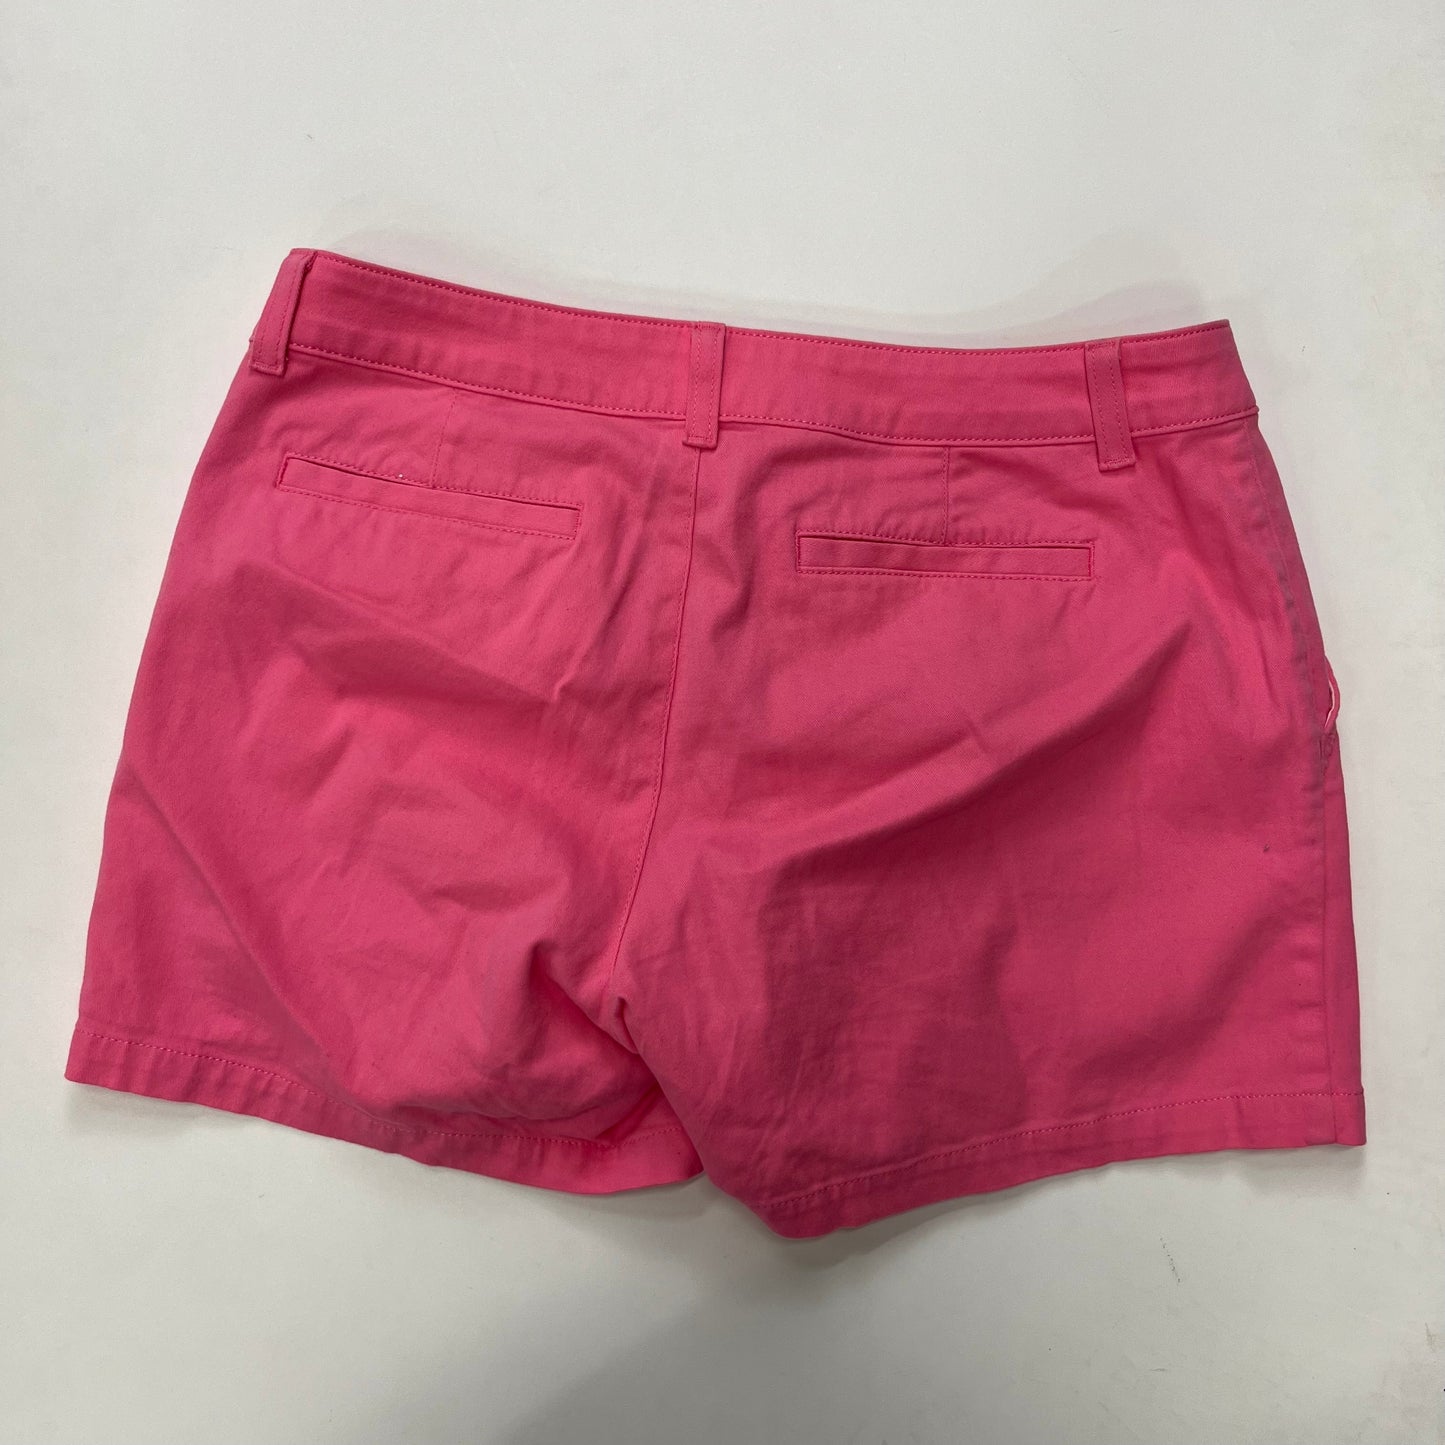 Pink Shorts Ana, Size 6